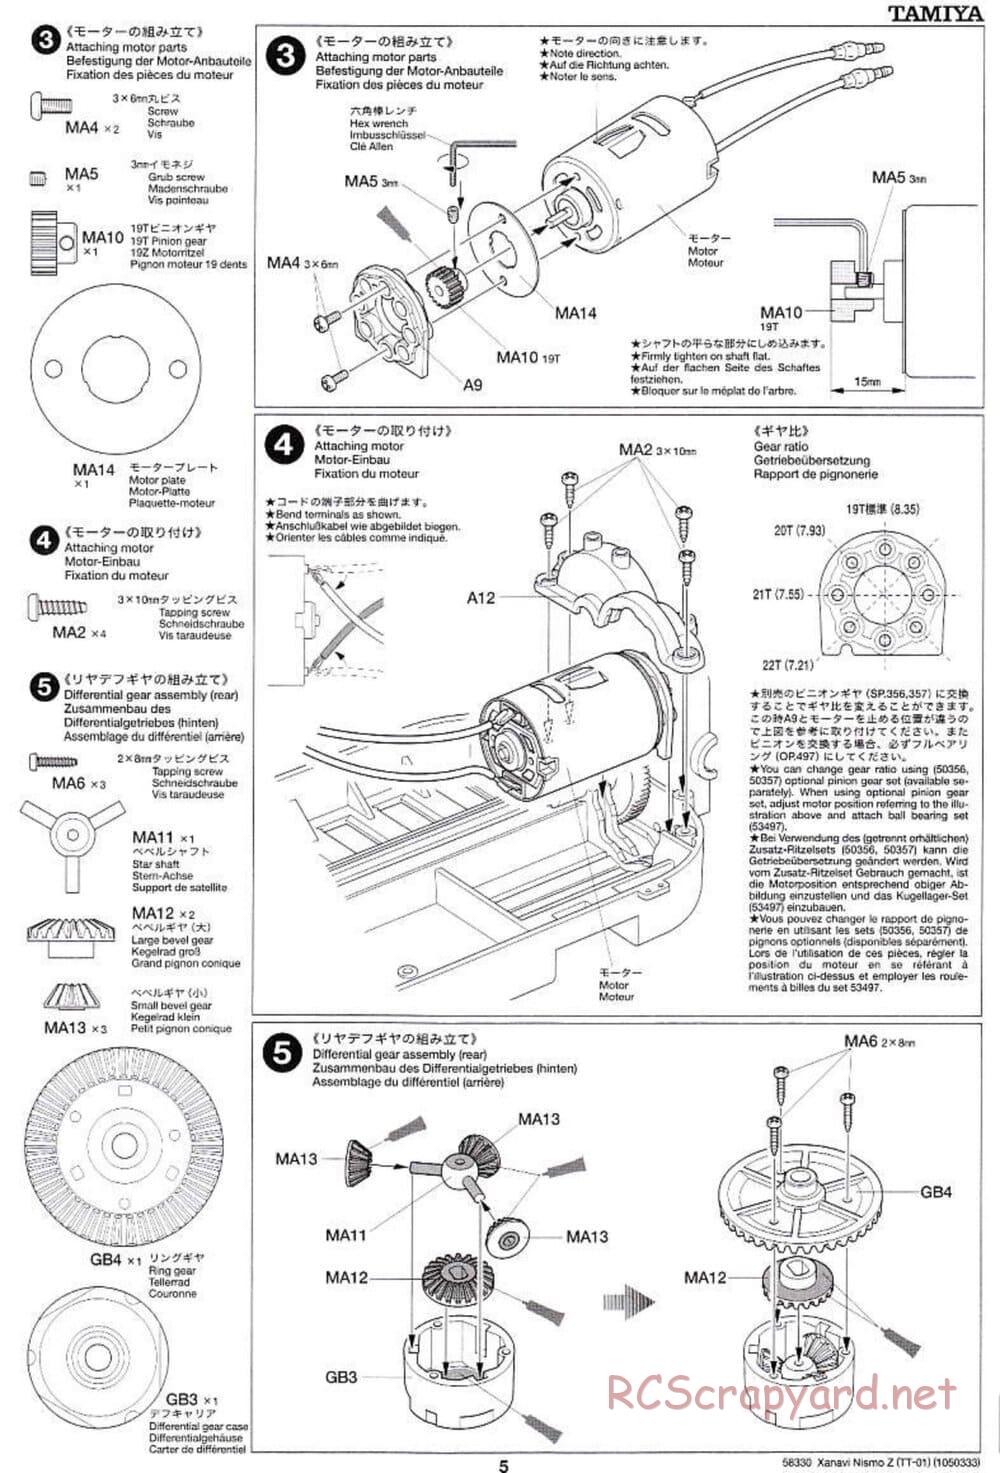 Tamiya - Xanavi Nismo Z - TT-01 Chassis - Manual - Page 5